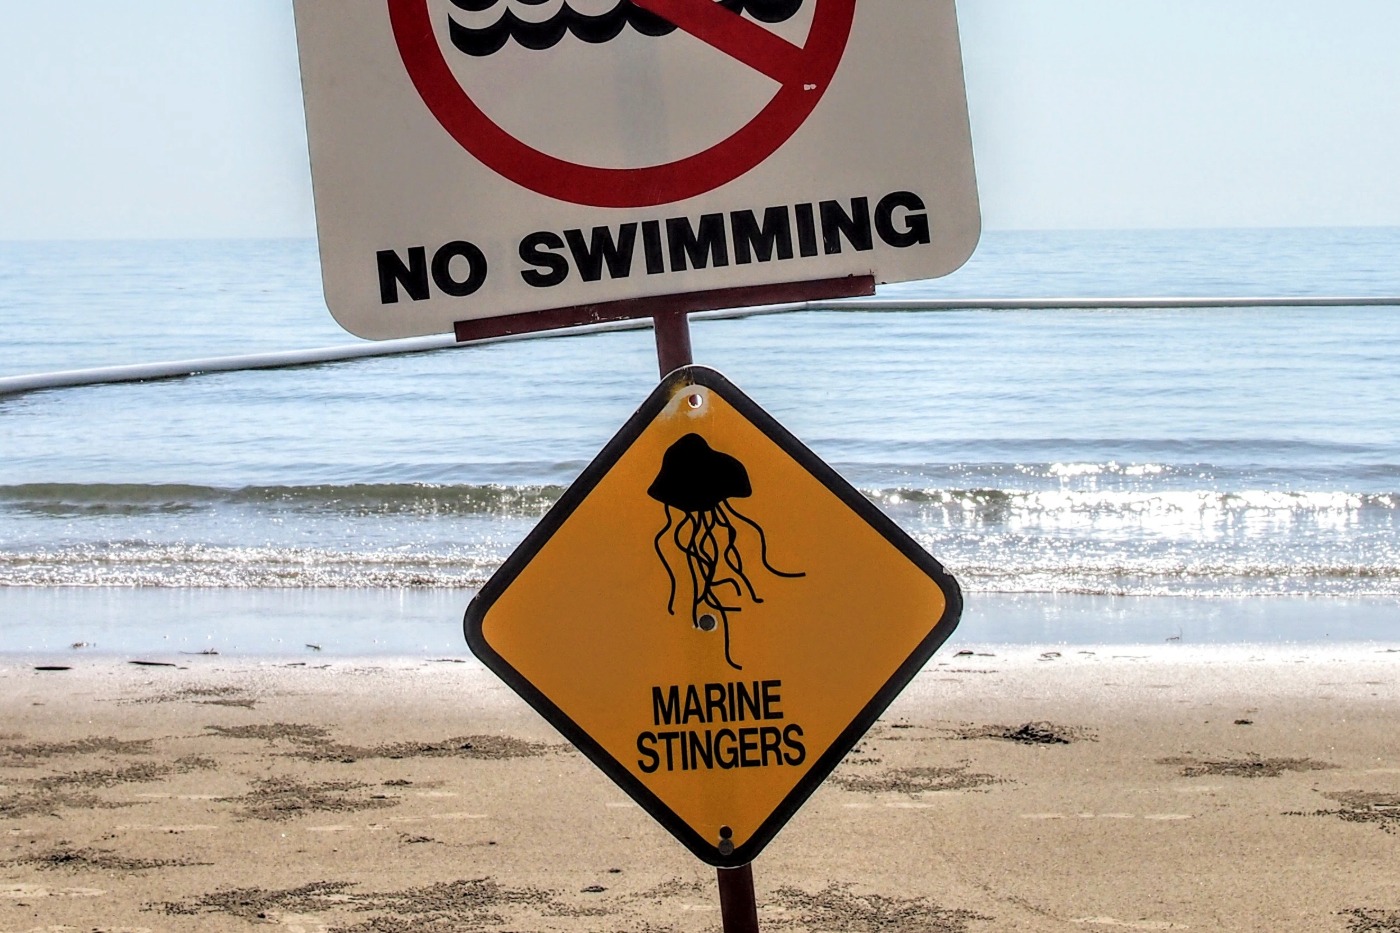 Beach closed marine stingers sign